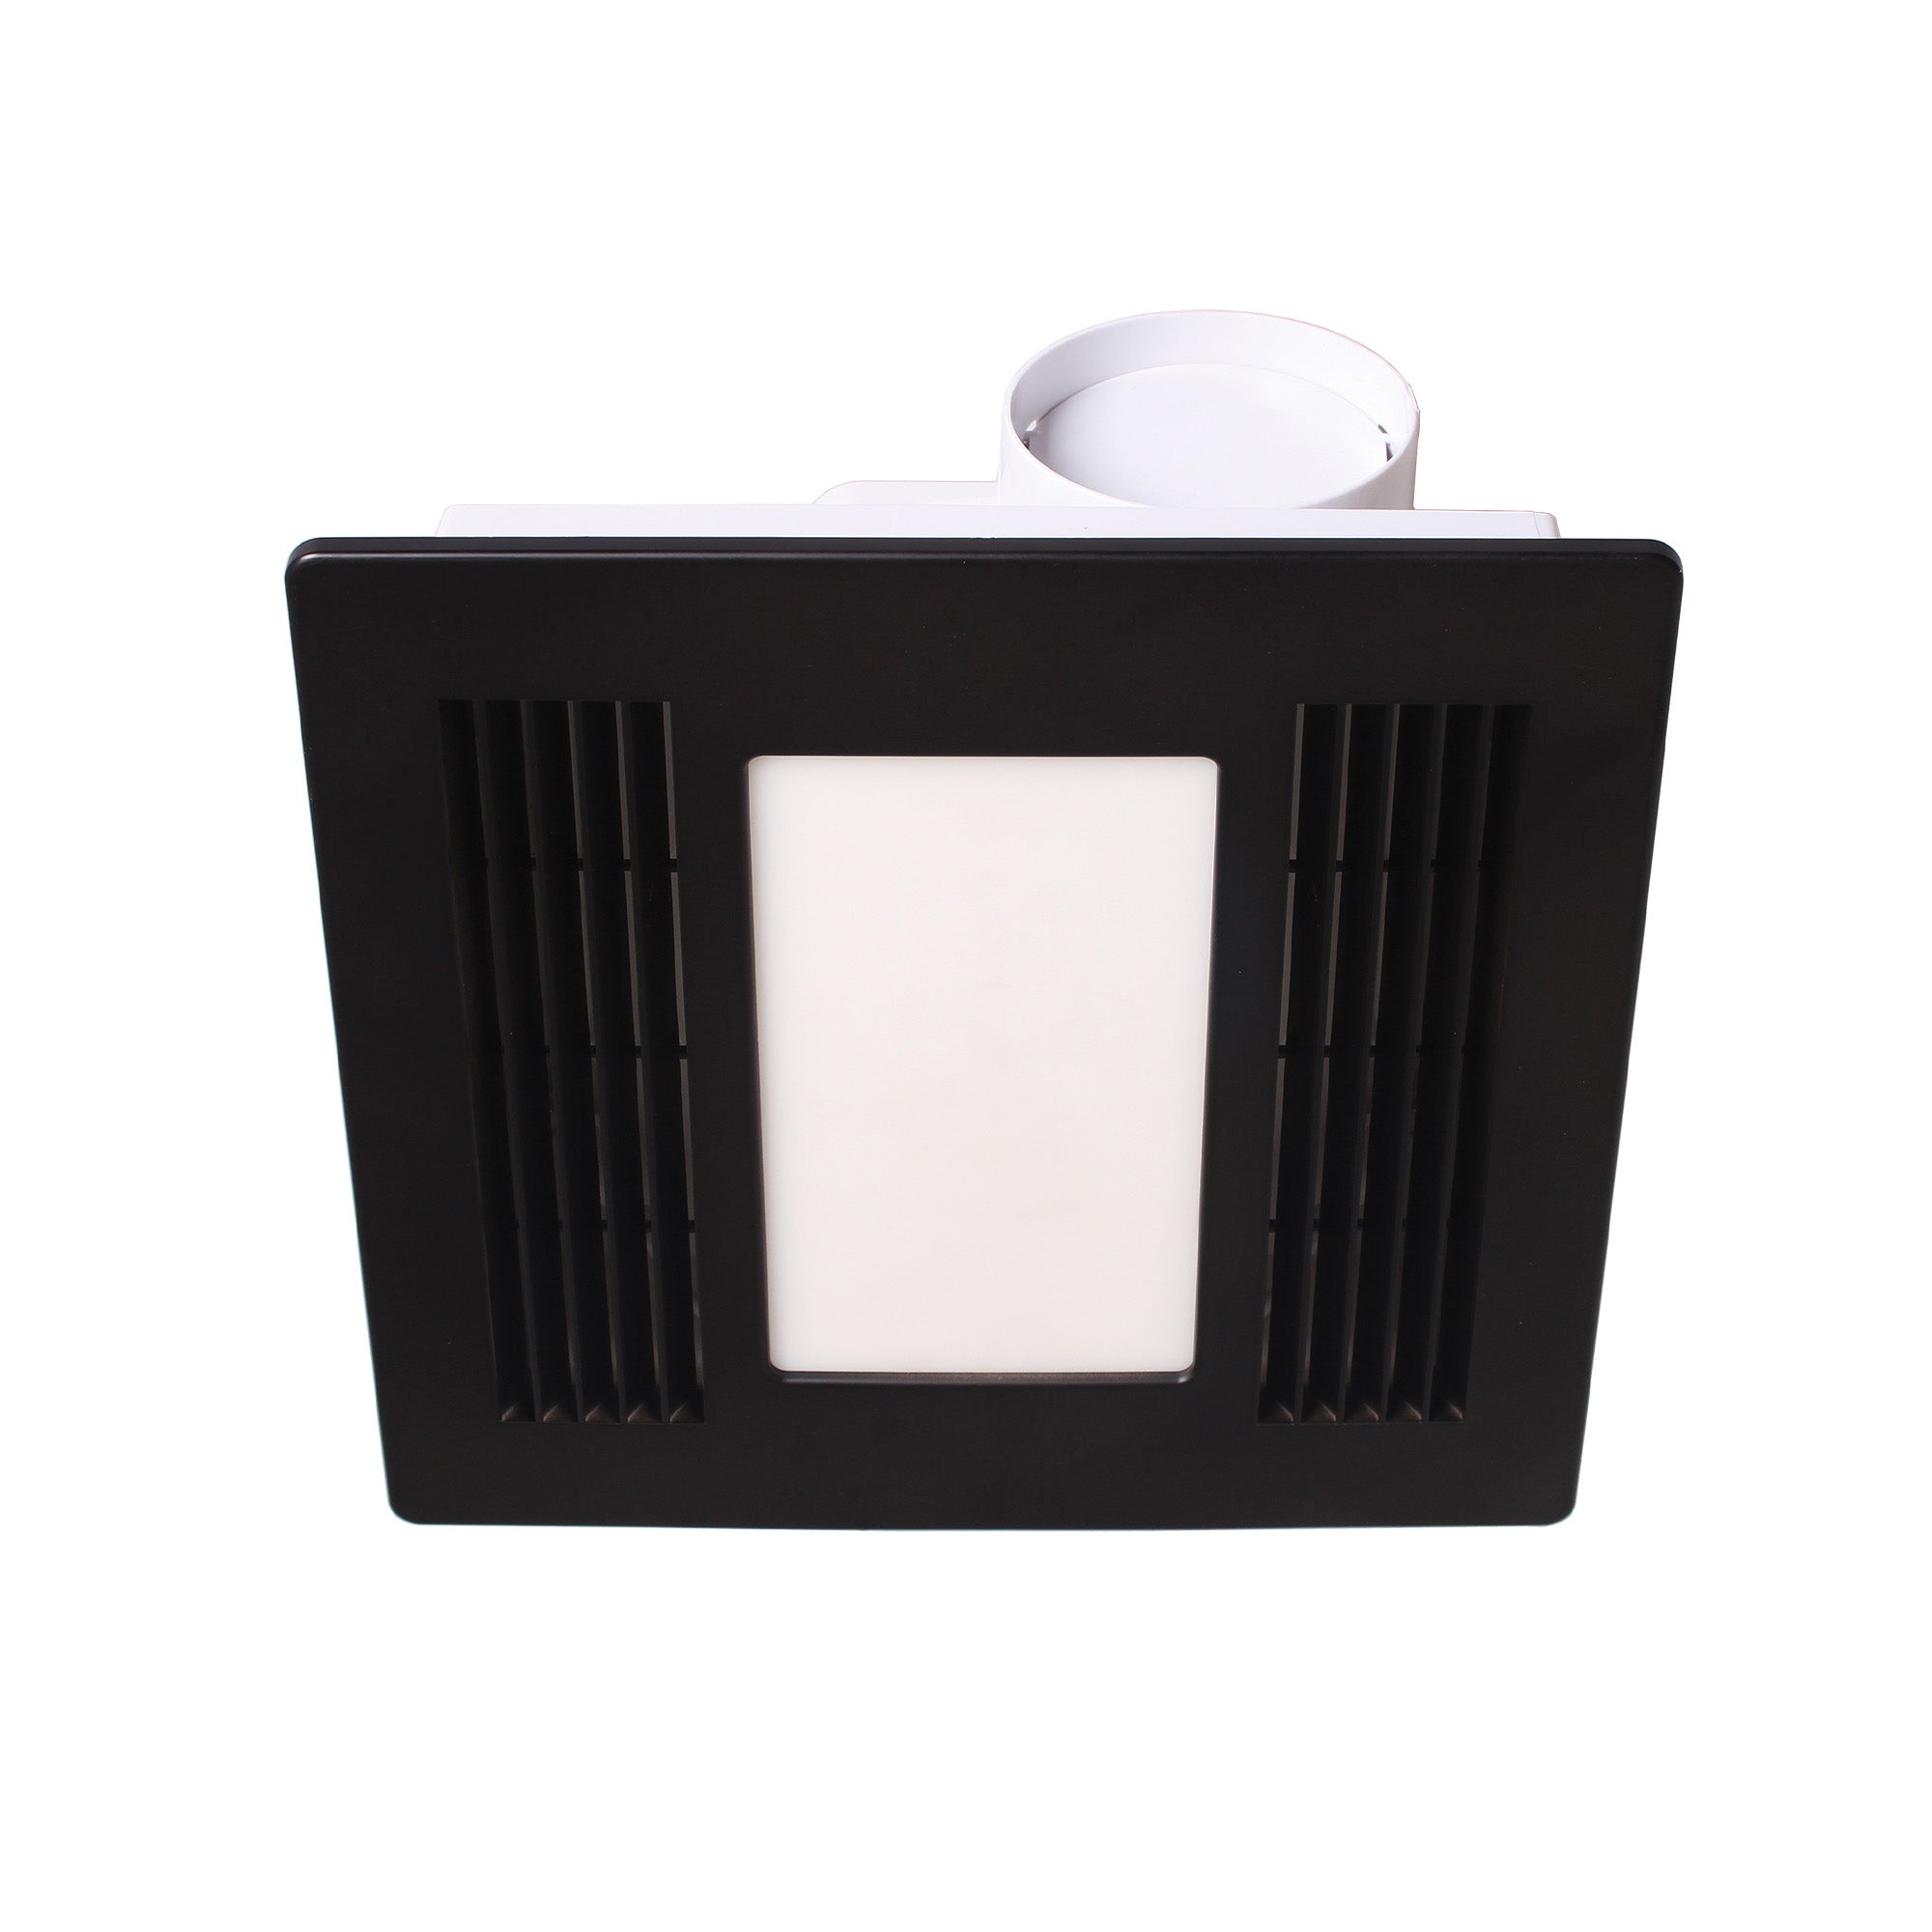 Aceline 240 CCT LED Square Black Exhaust Fan and Light